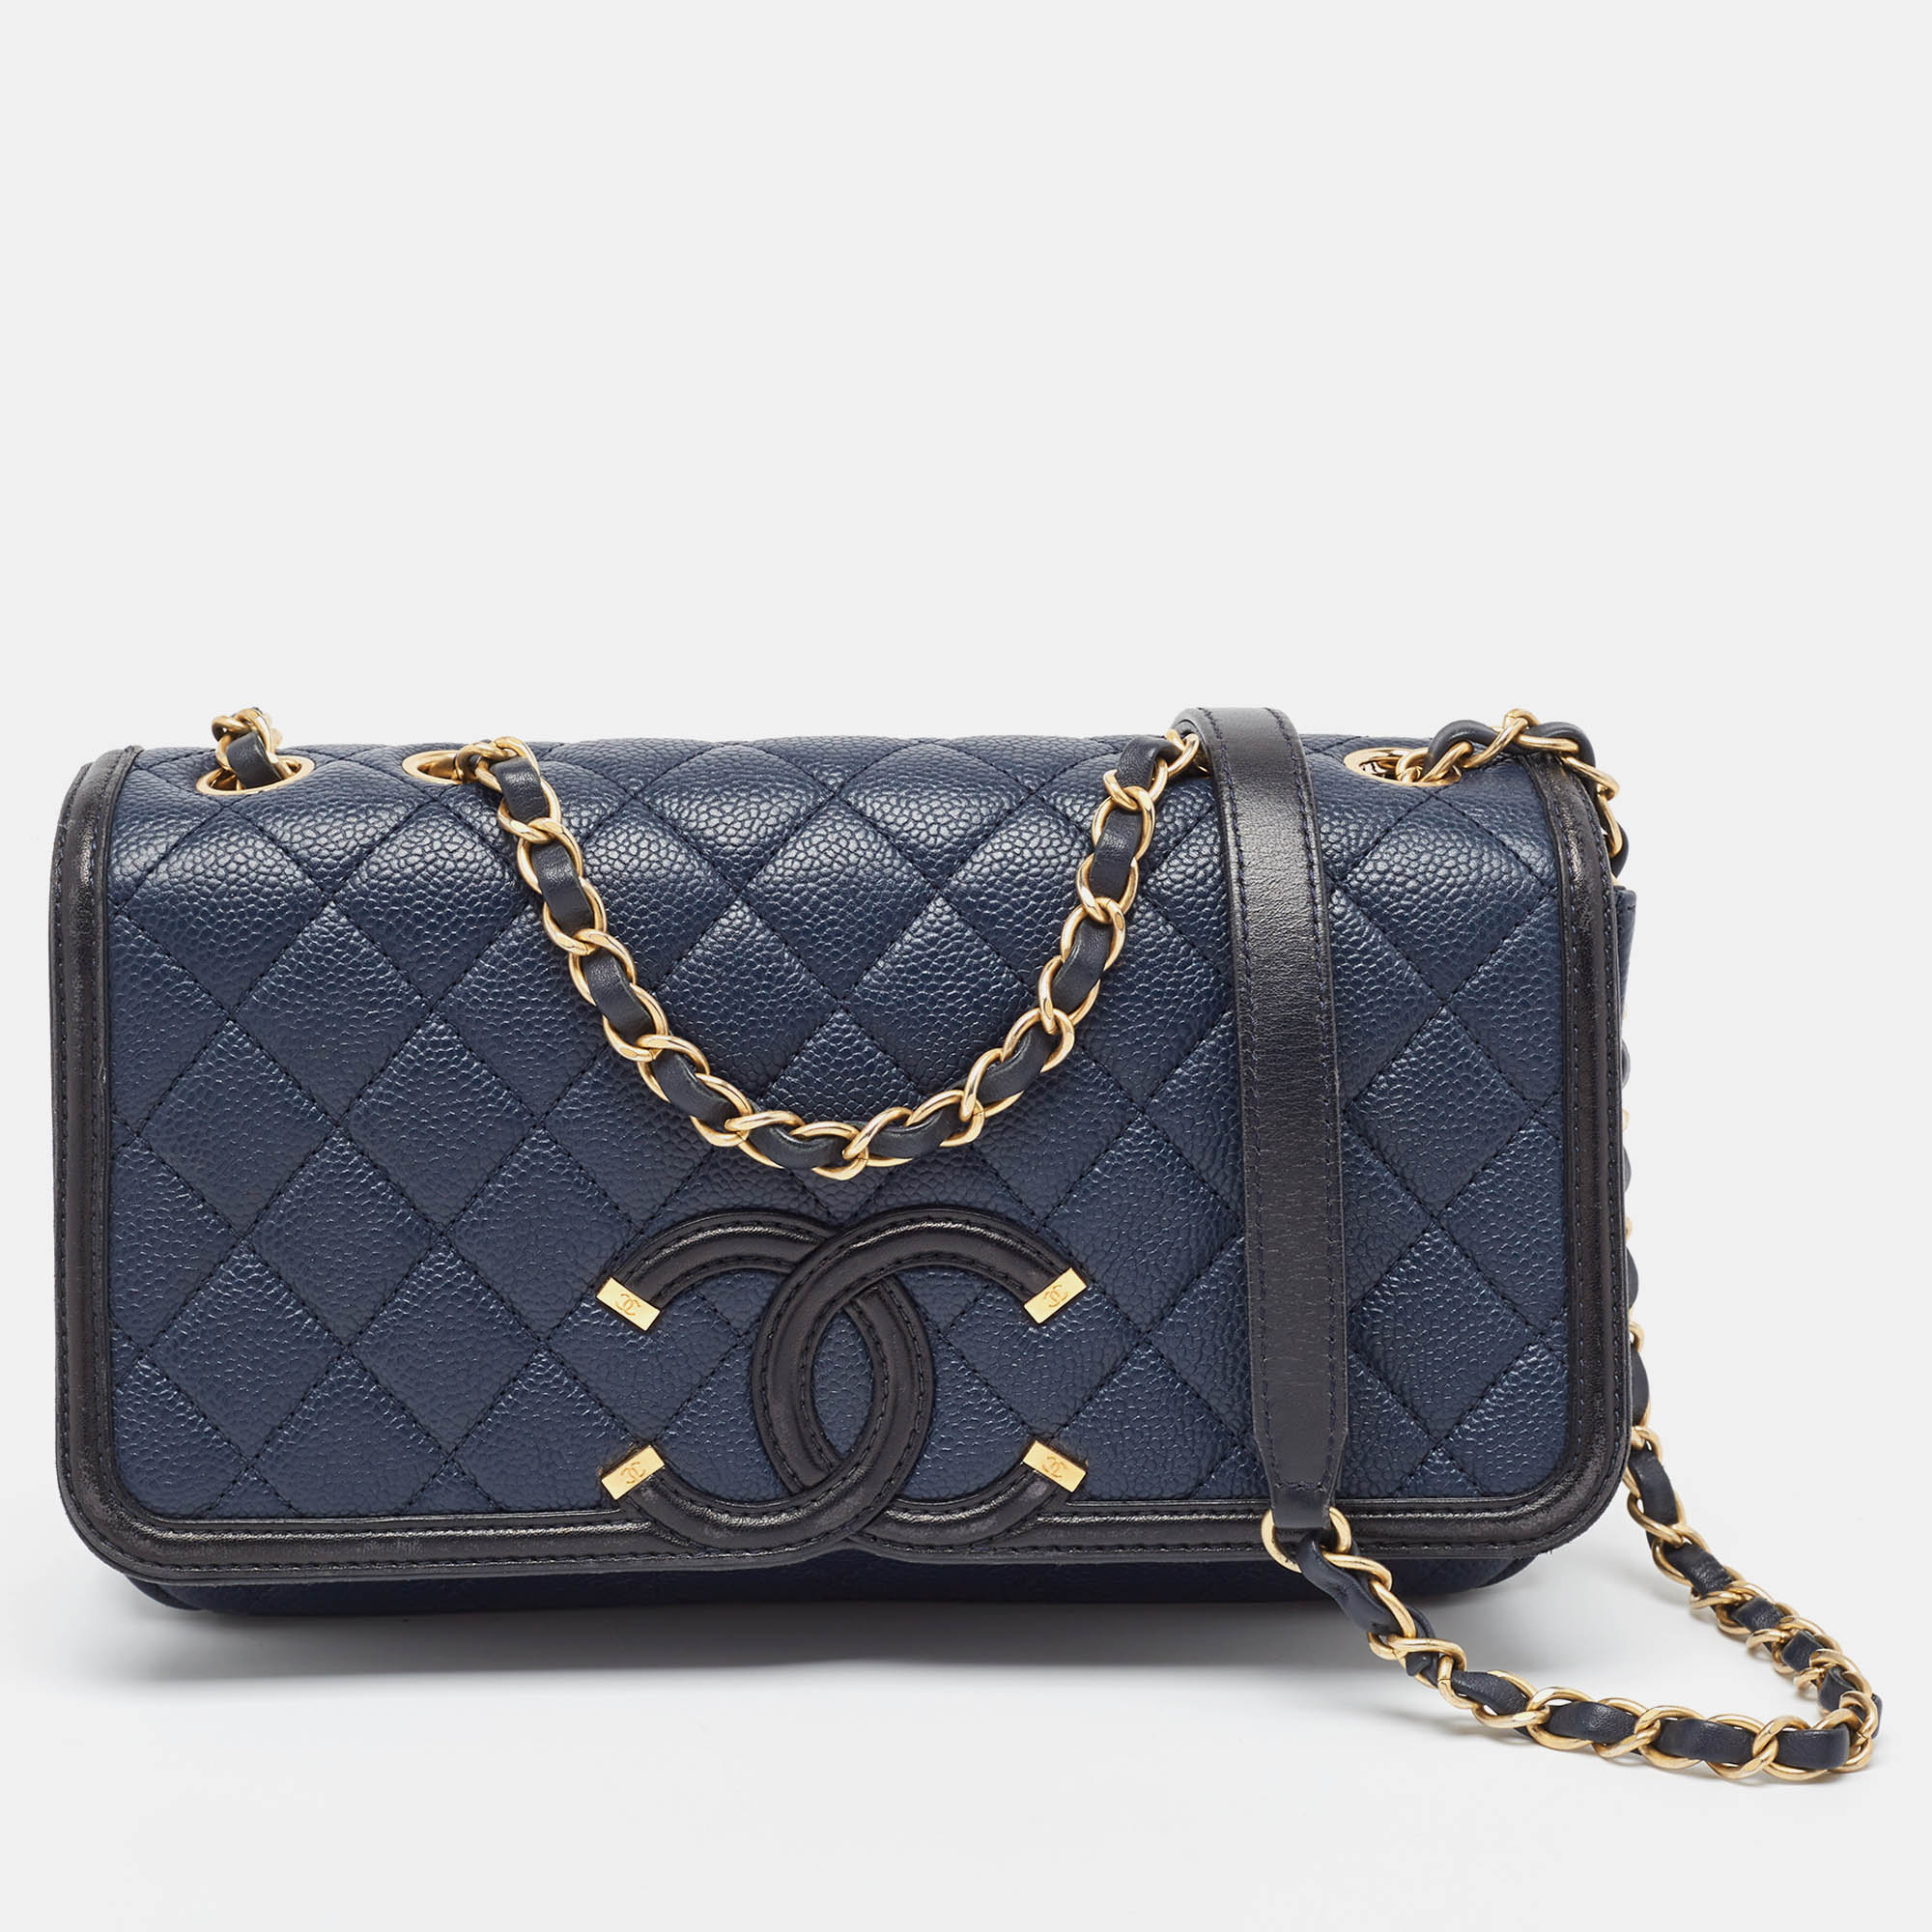 Pre-owned Chanel Navy Blue/black Caviar Leather Medium Cc Filigree Flap Bag